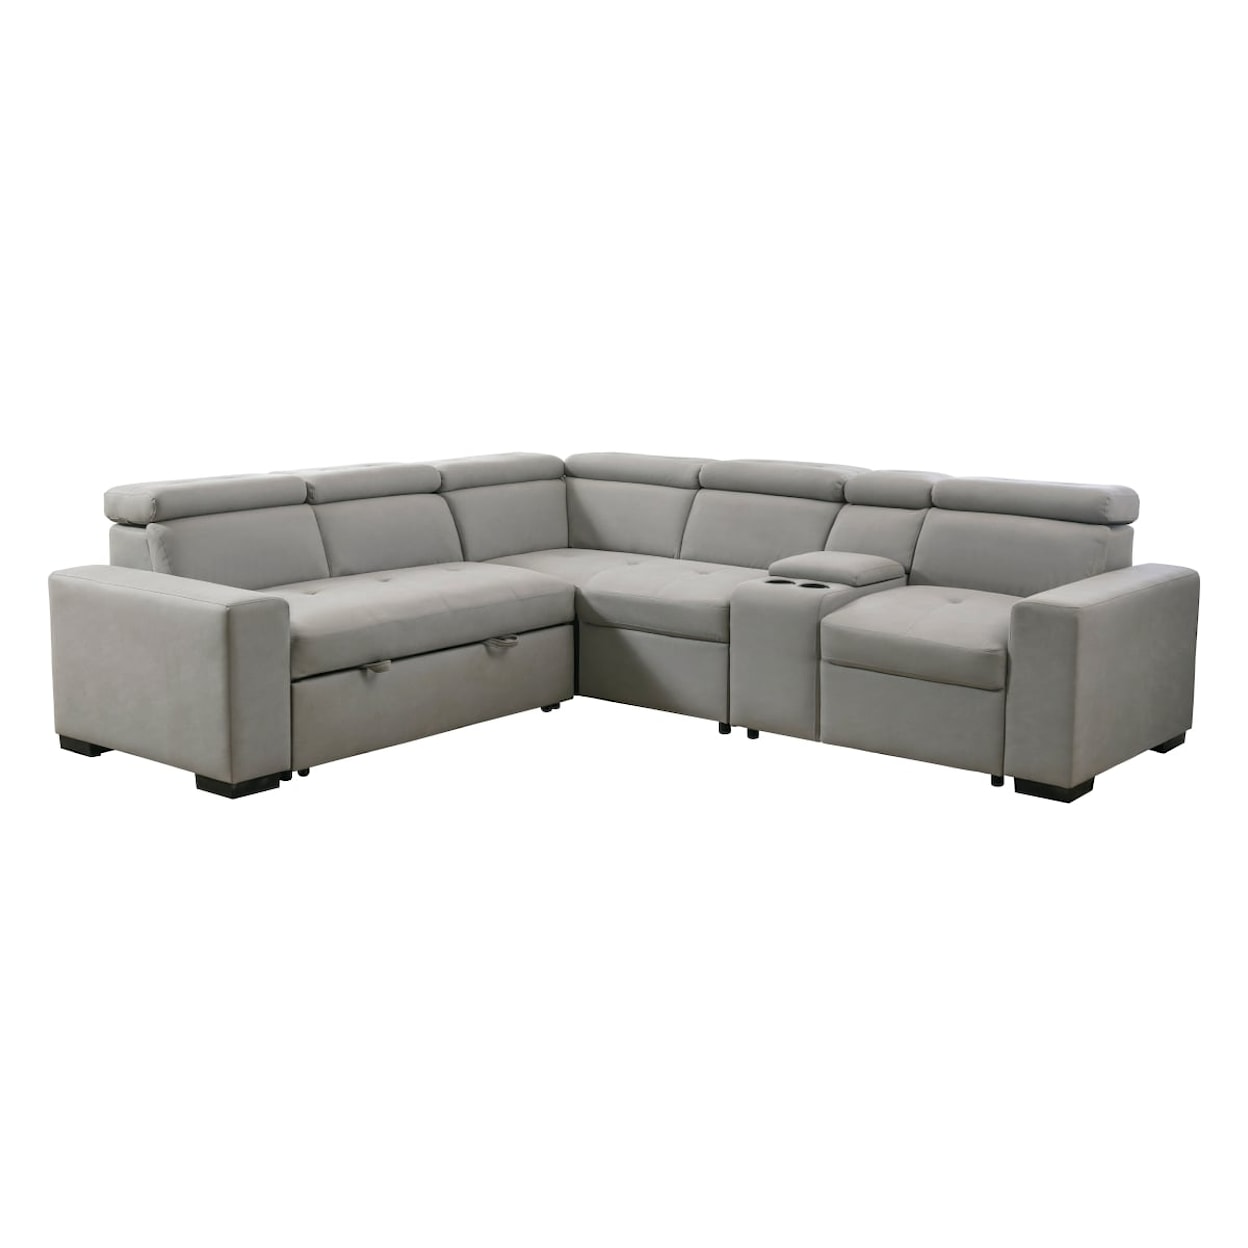 Homelegance Furniture Homelegance 3-Piece Sectional Sofa